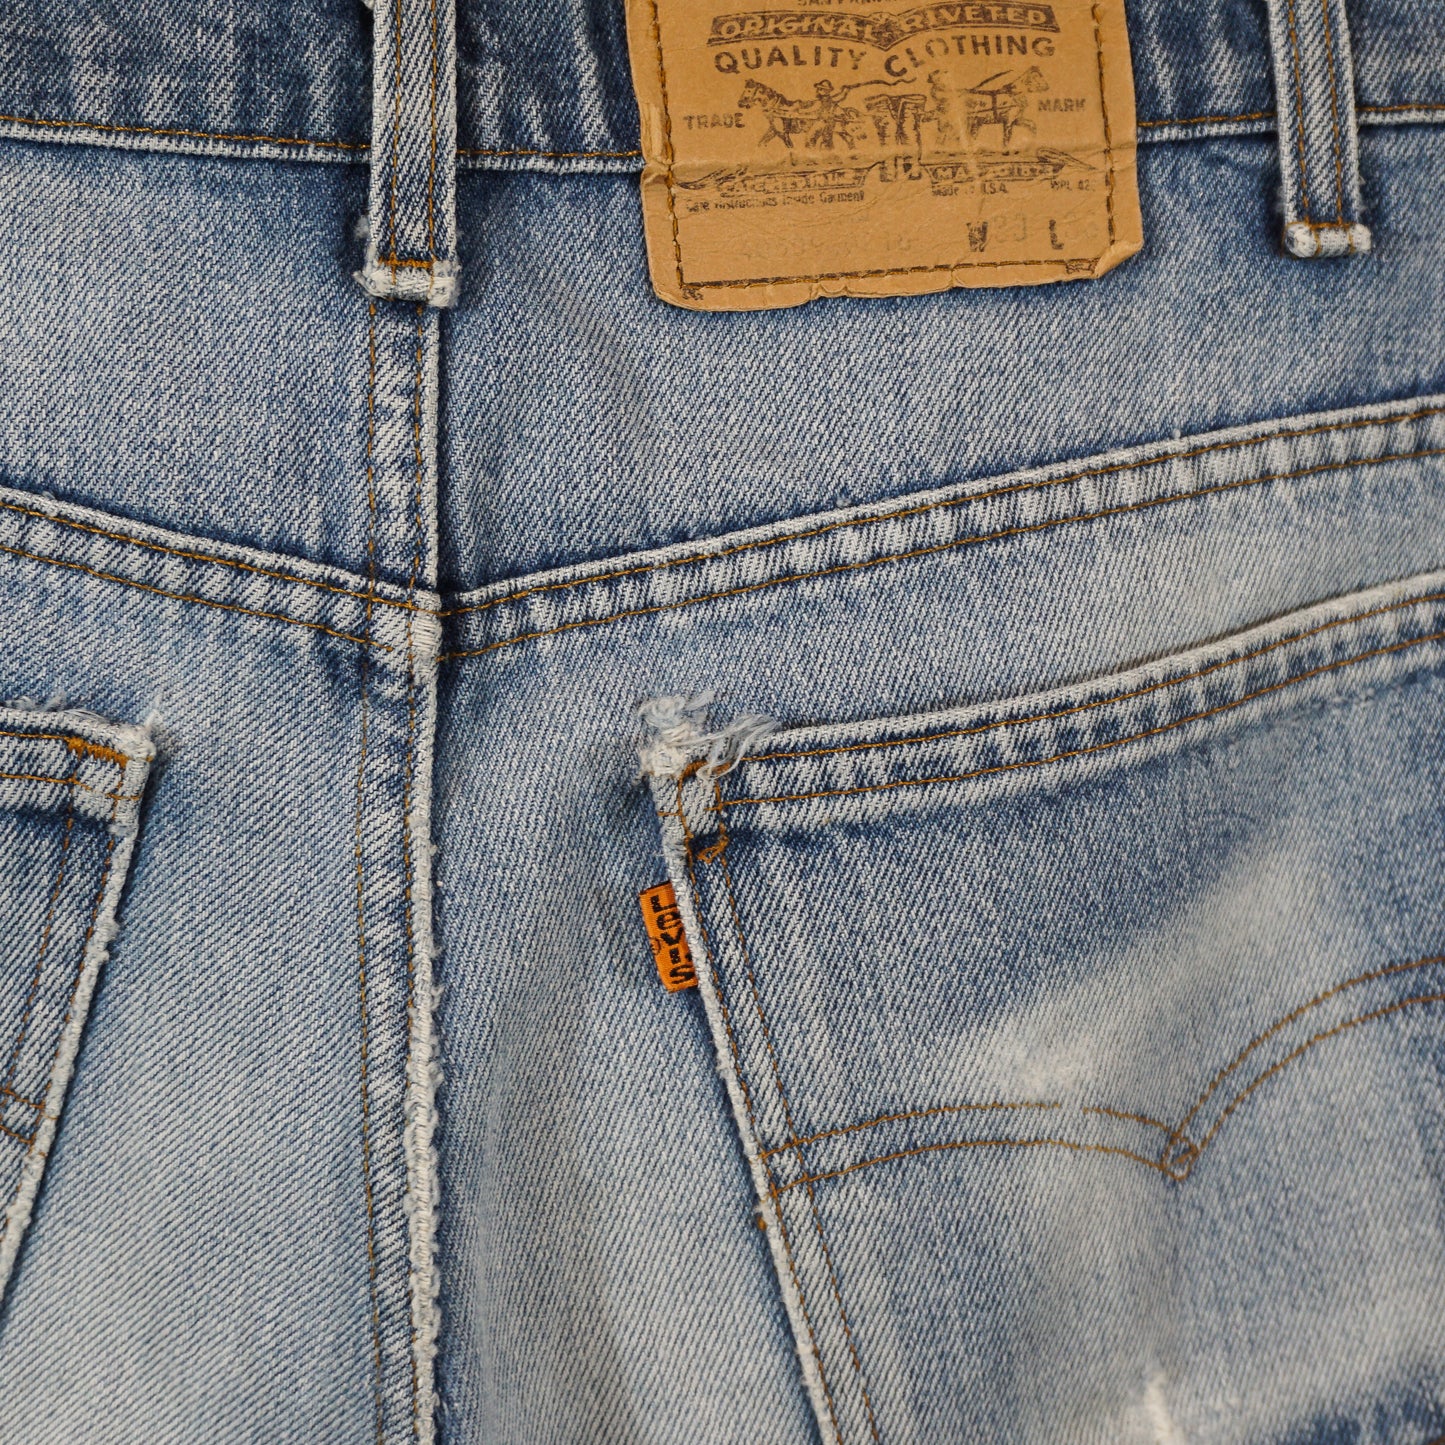 80s Levi's Orange Tab Jeans (31x33)